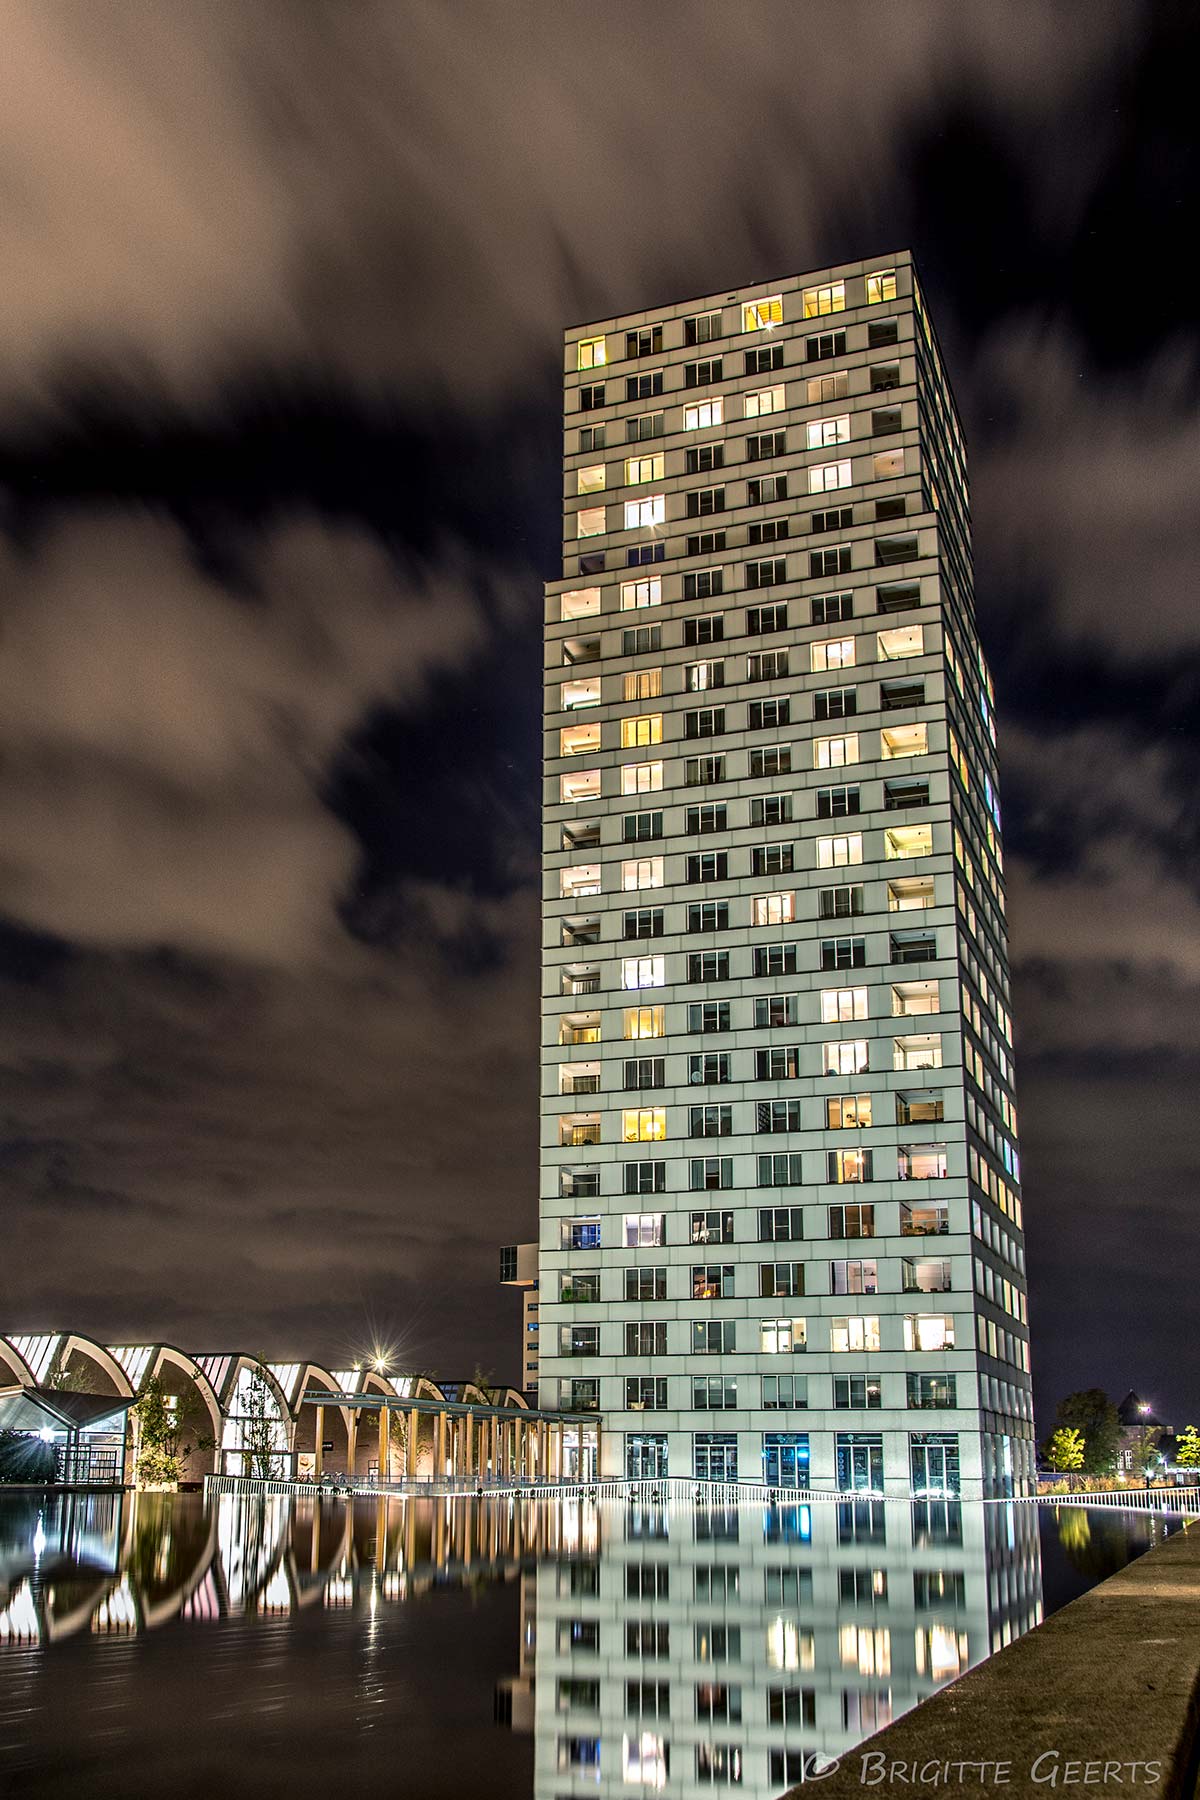 Nachtfotografie Den Bosch